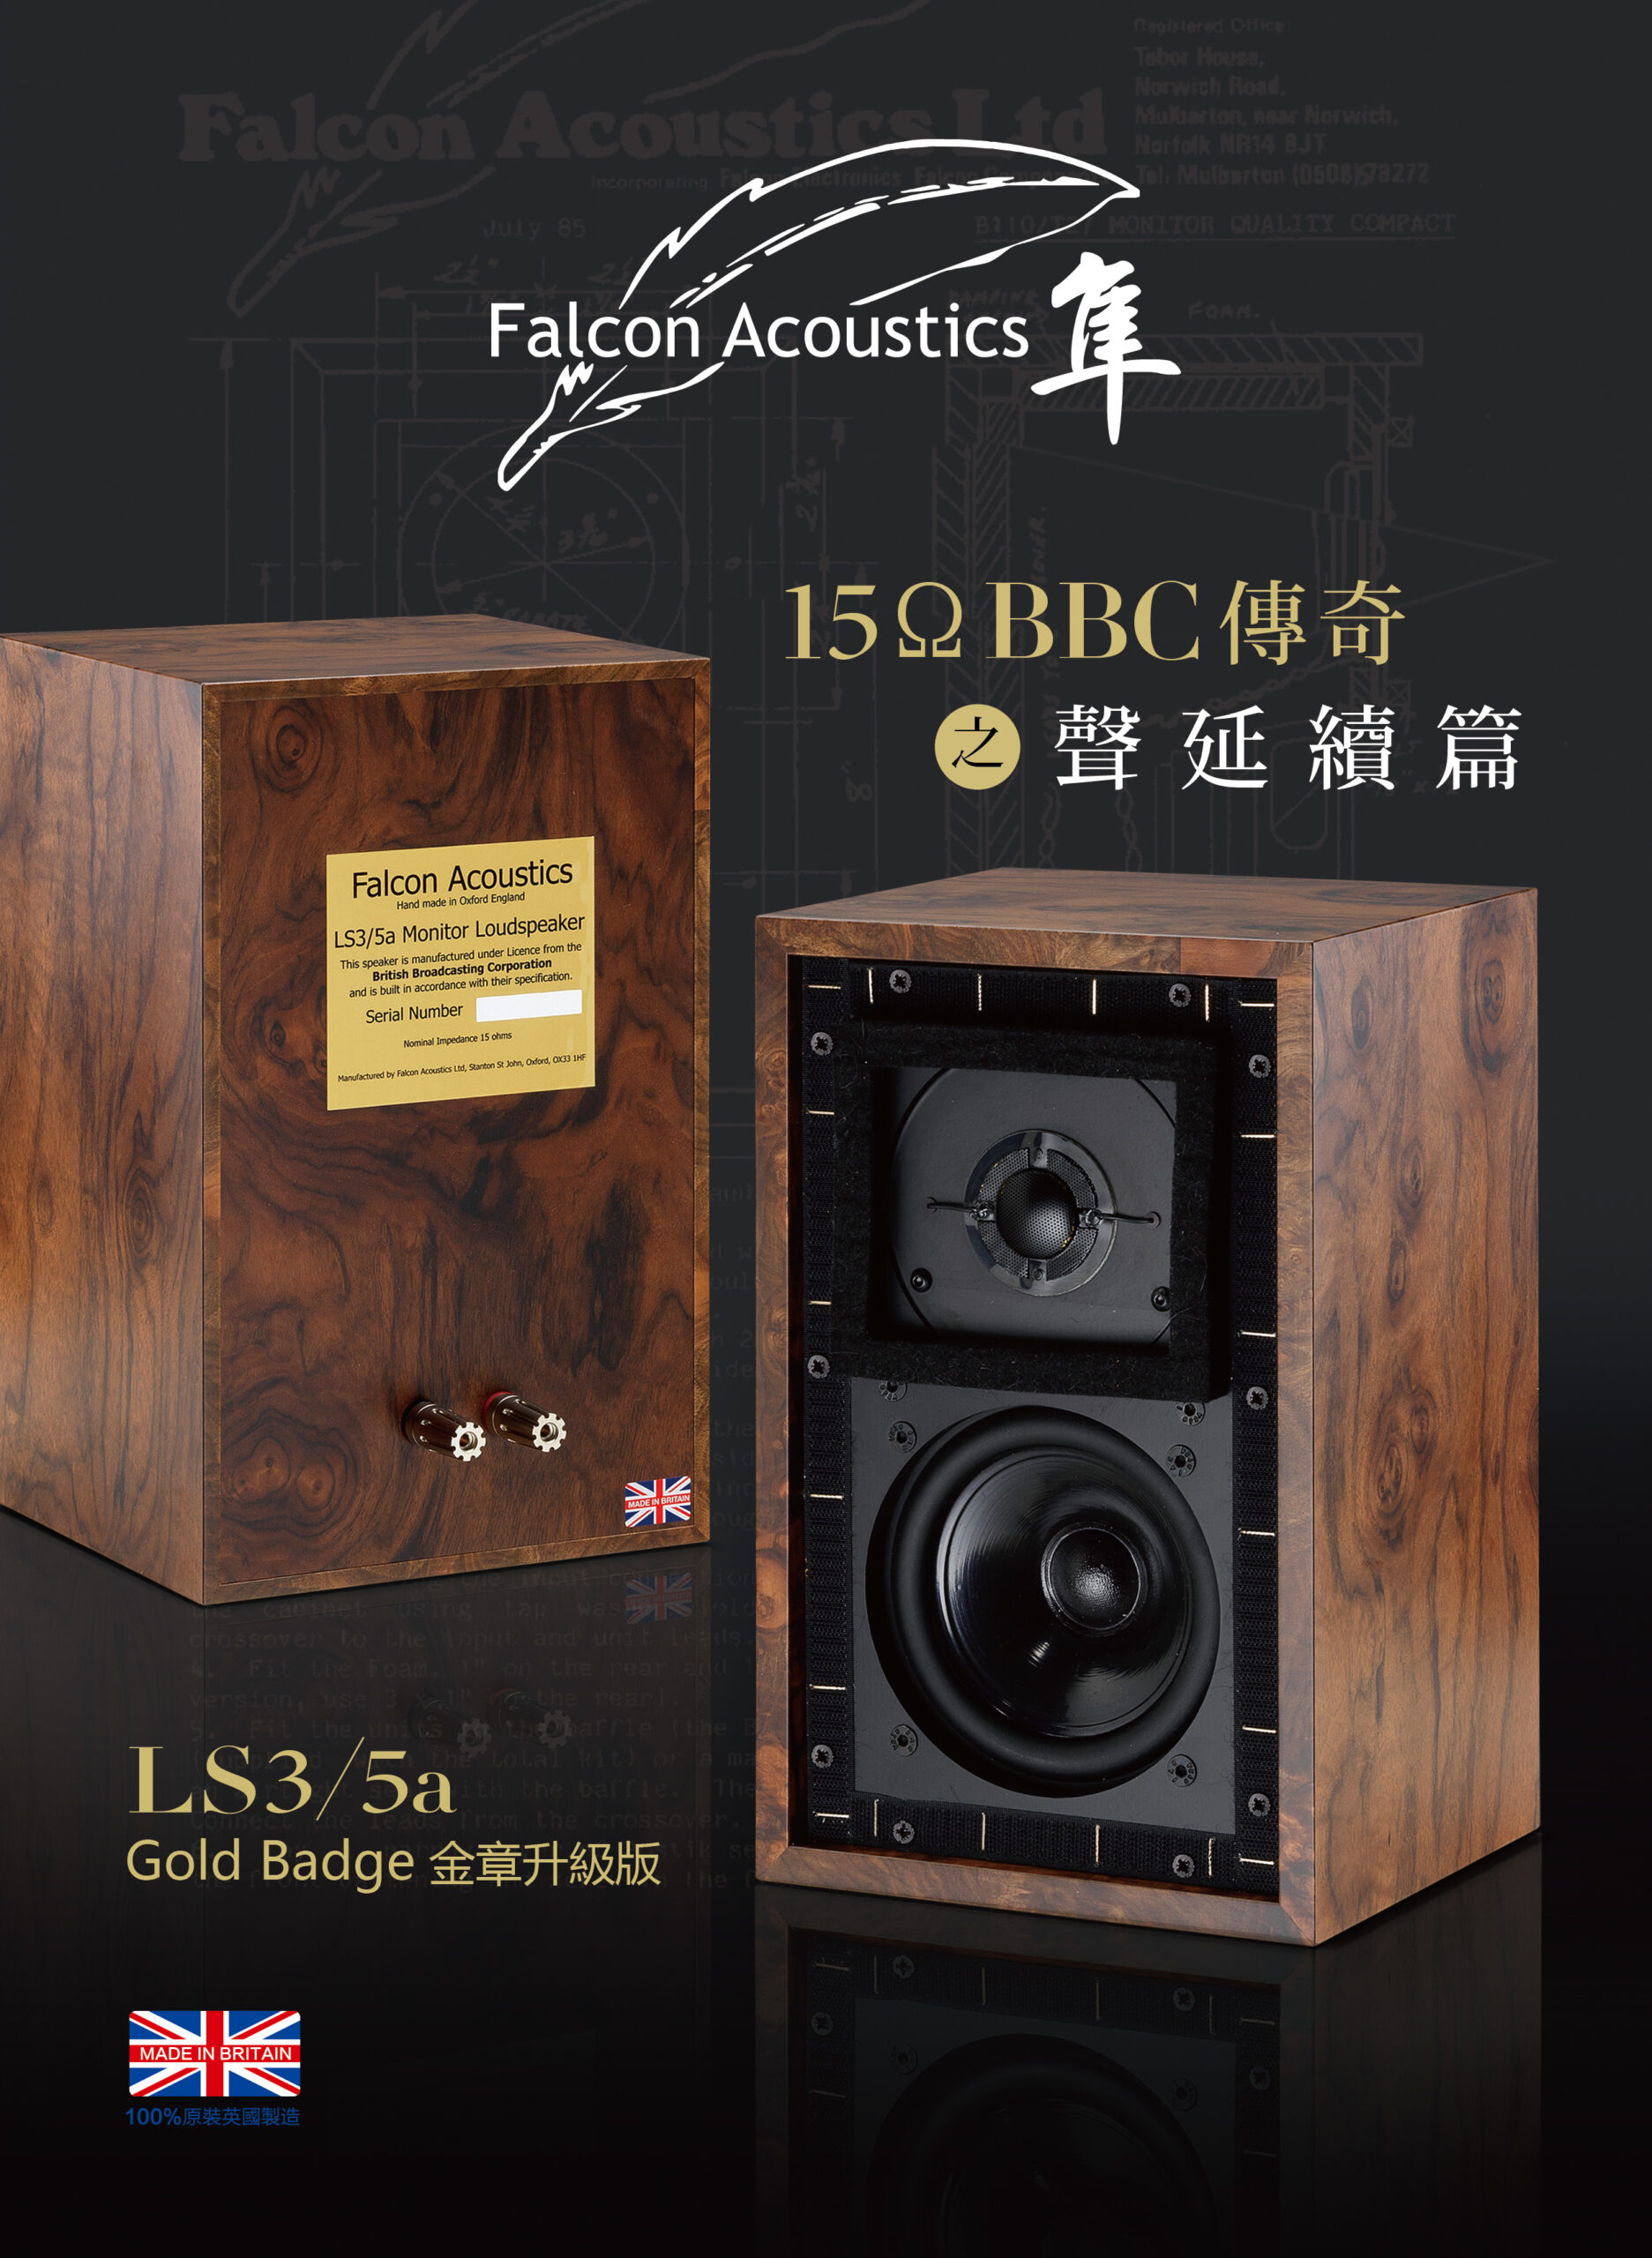 Falcon Acoustics_20210625_01-1a